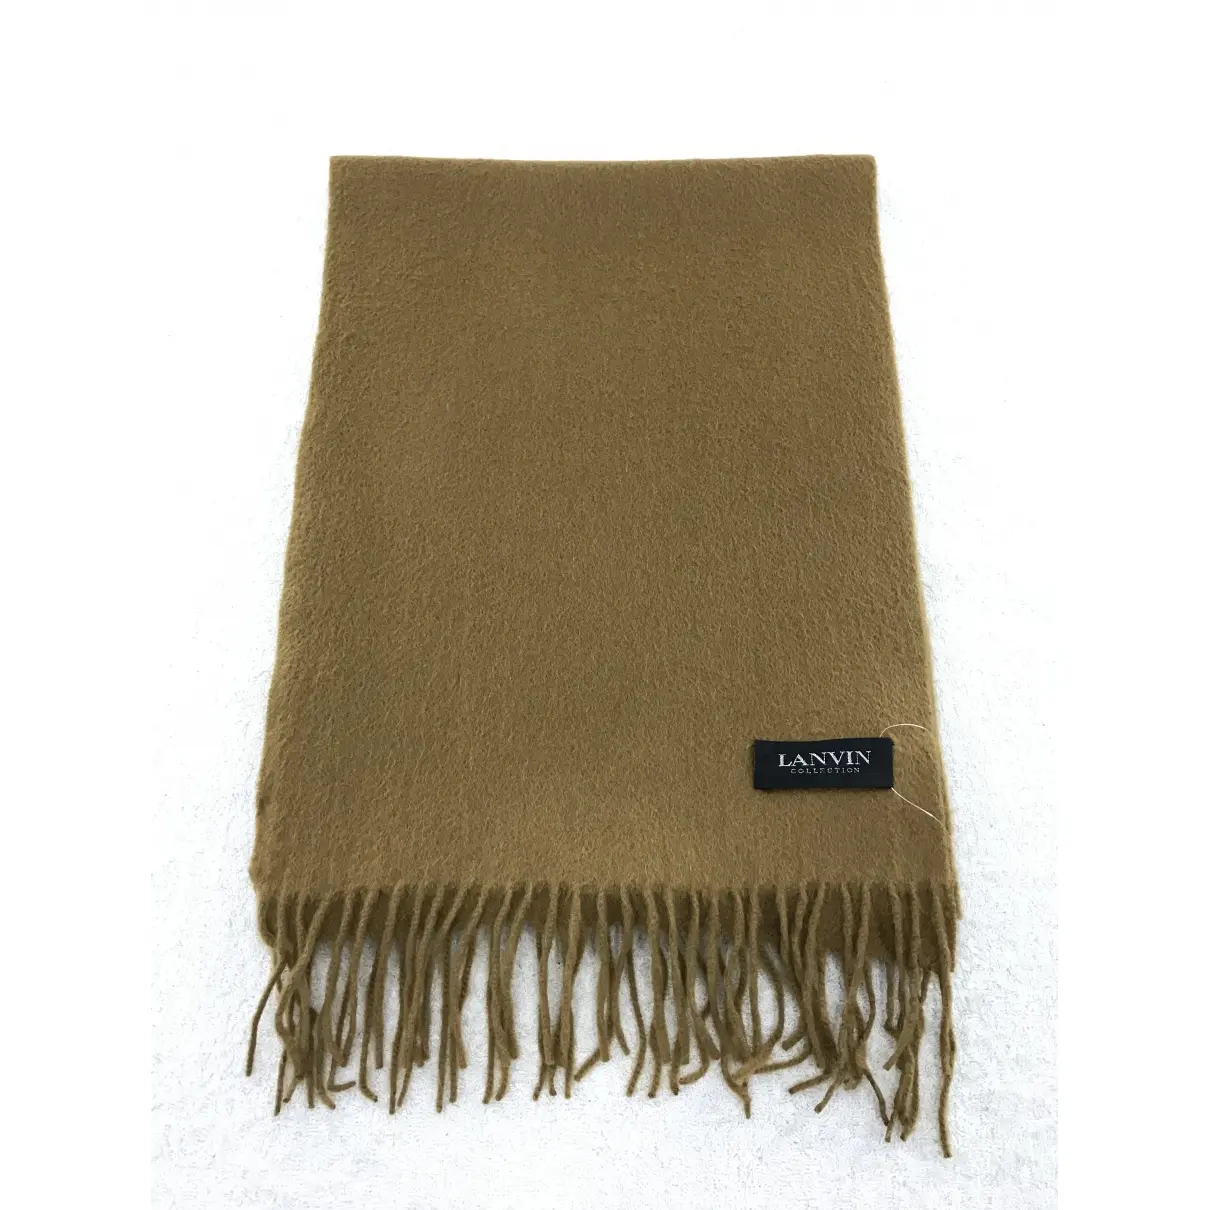 Lanvin Cashmere scarf & pocket square for sale